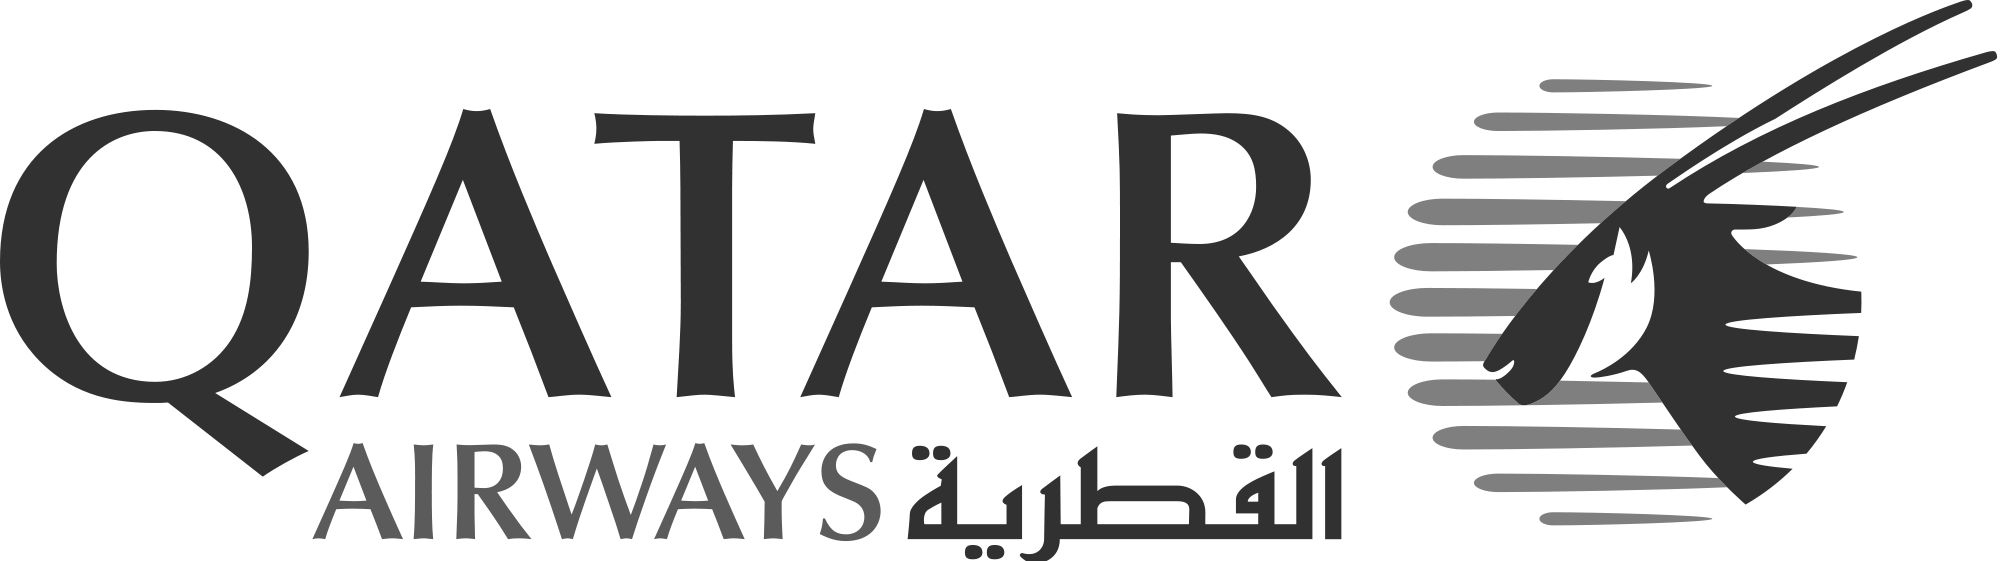 Qatar_Airways_Logo.png